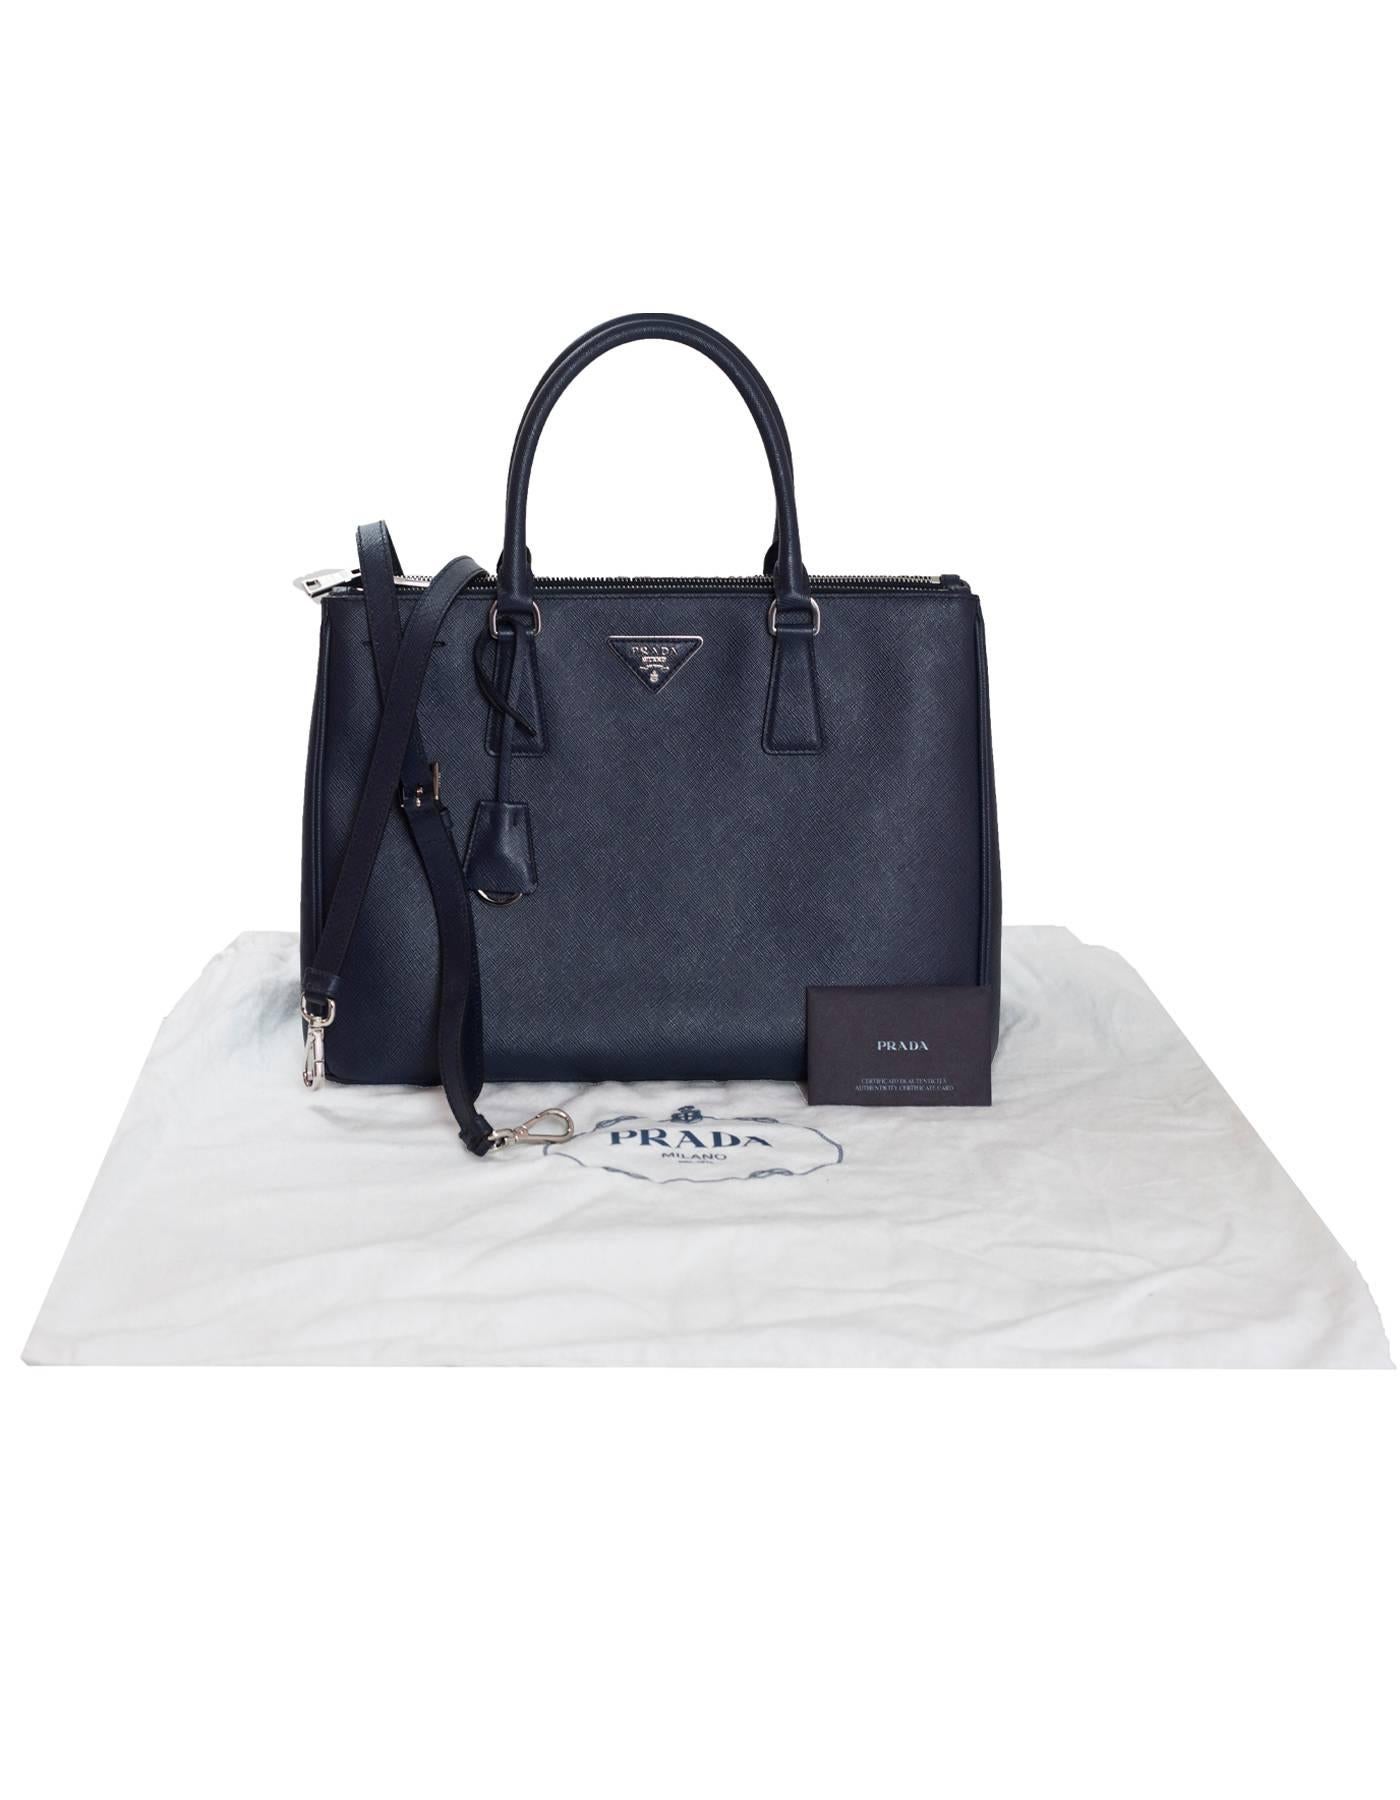 Prada Baltico Navy Blue Medium Double Zip Saffiano Leather Tote Bag w/ Strap 2